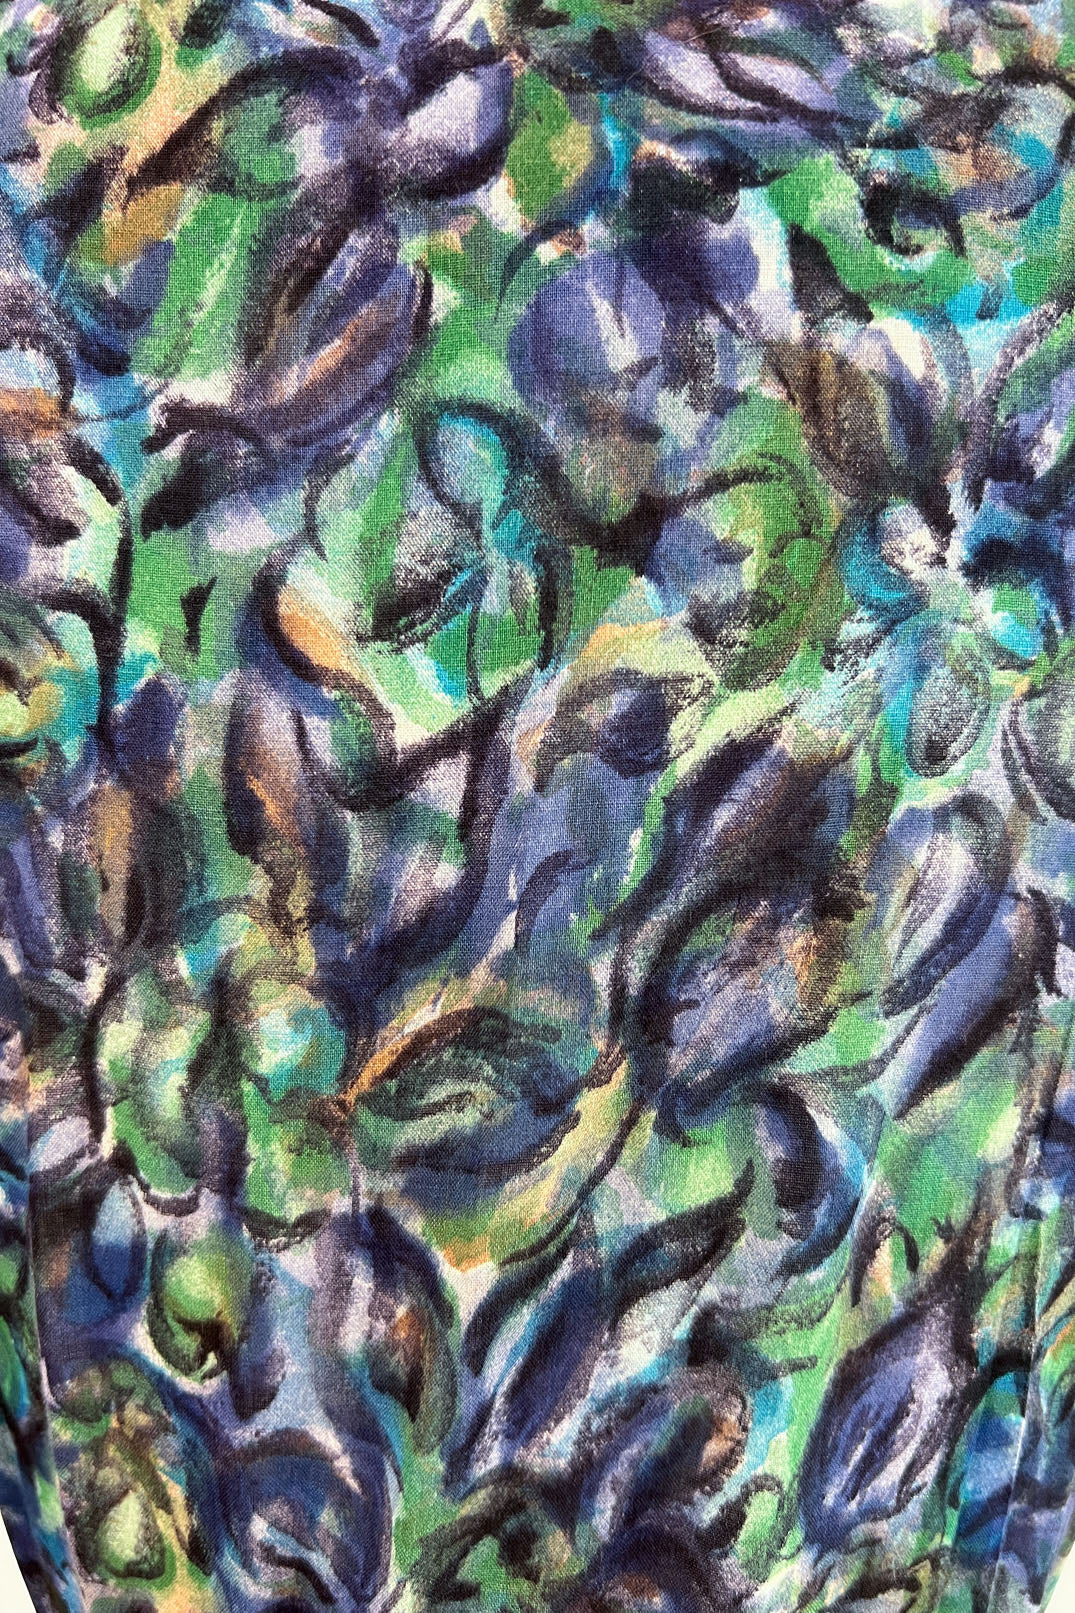 Vintage 1950s Dress - SUPER PRETTY Organic Blue Green Floral Print Cotton Shirtwaist Size M - L